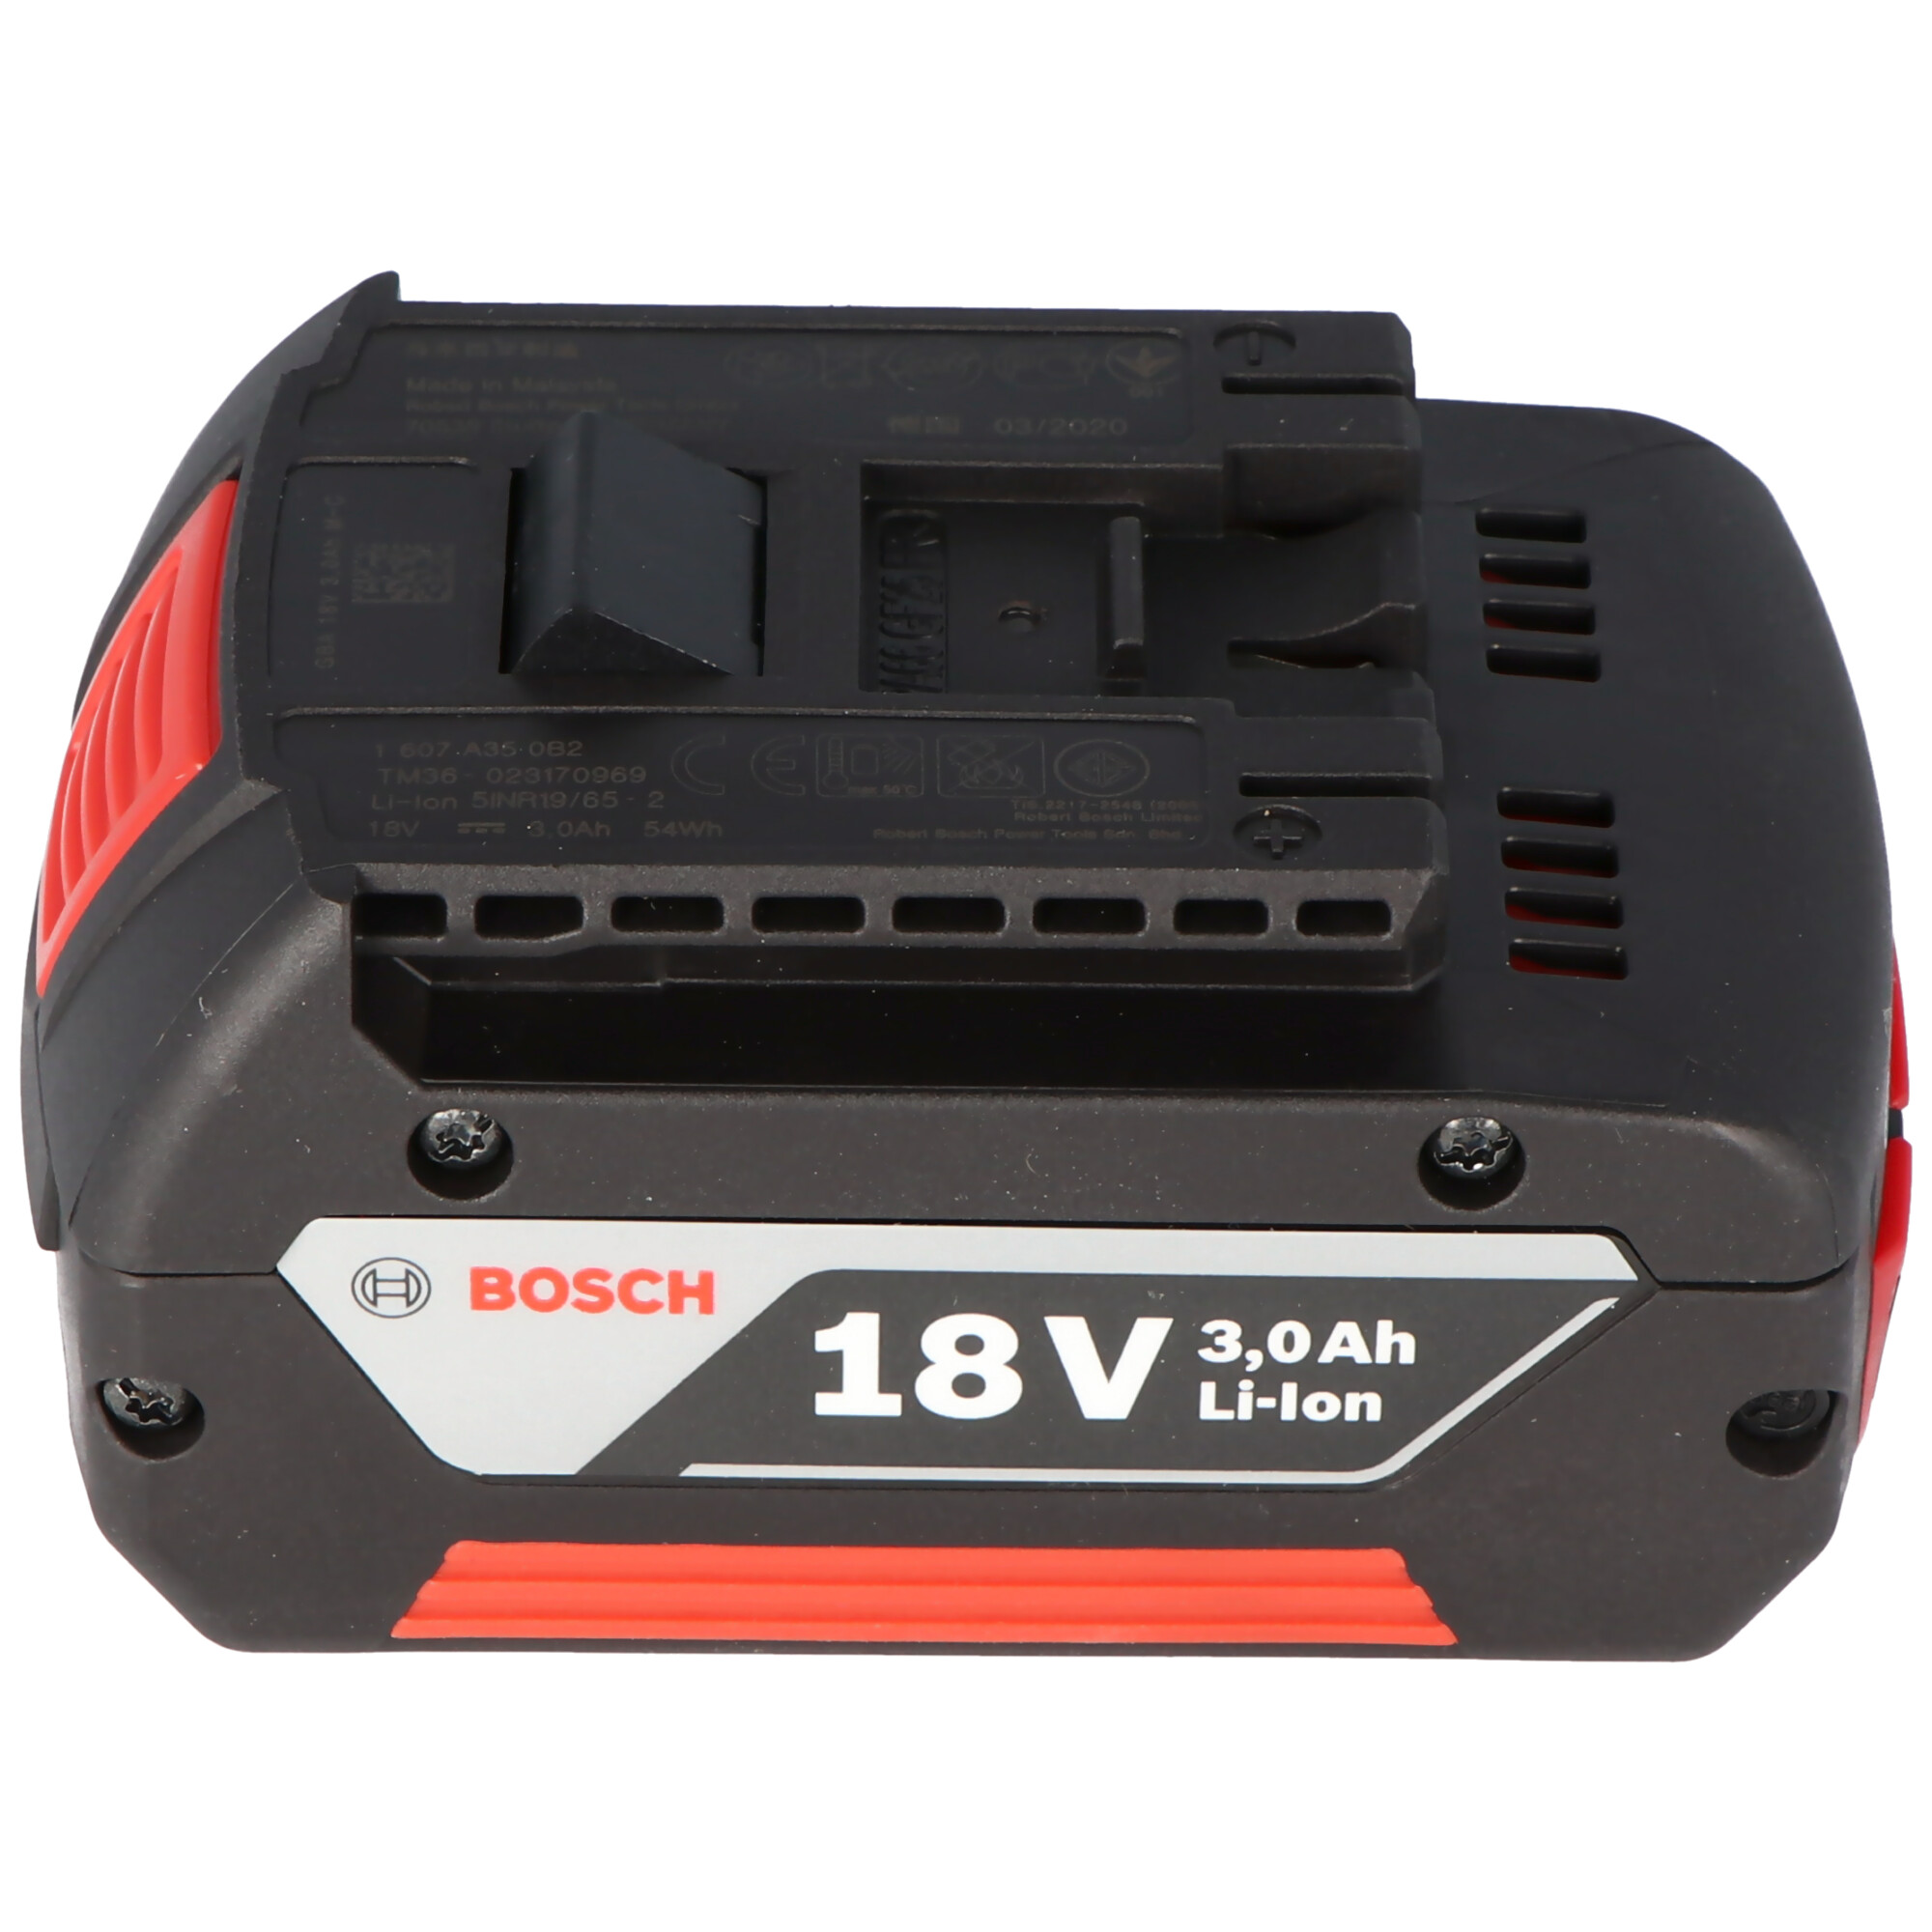 3000mAh Original Bosch GSR 18 V-LI Akku 2607336815, 2607337263, 1600A004ZN mit 18 Volt und 3Ah